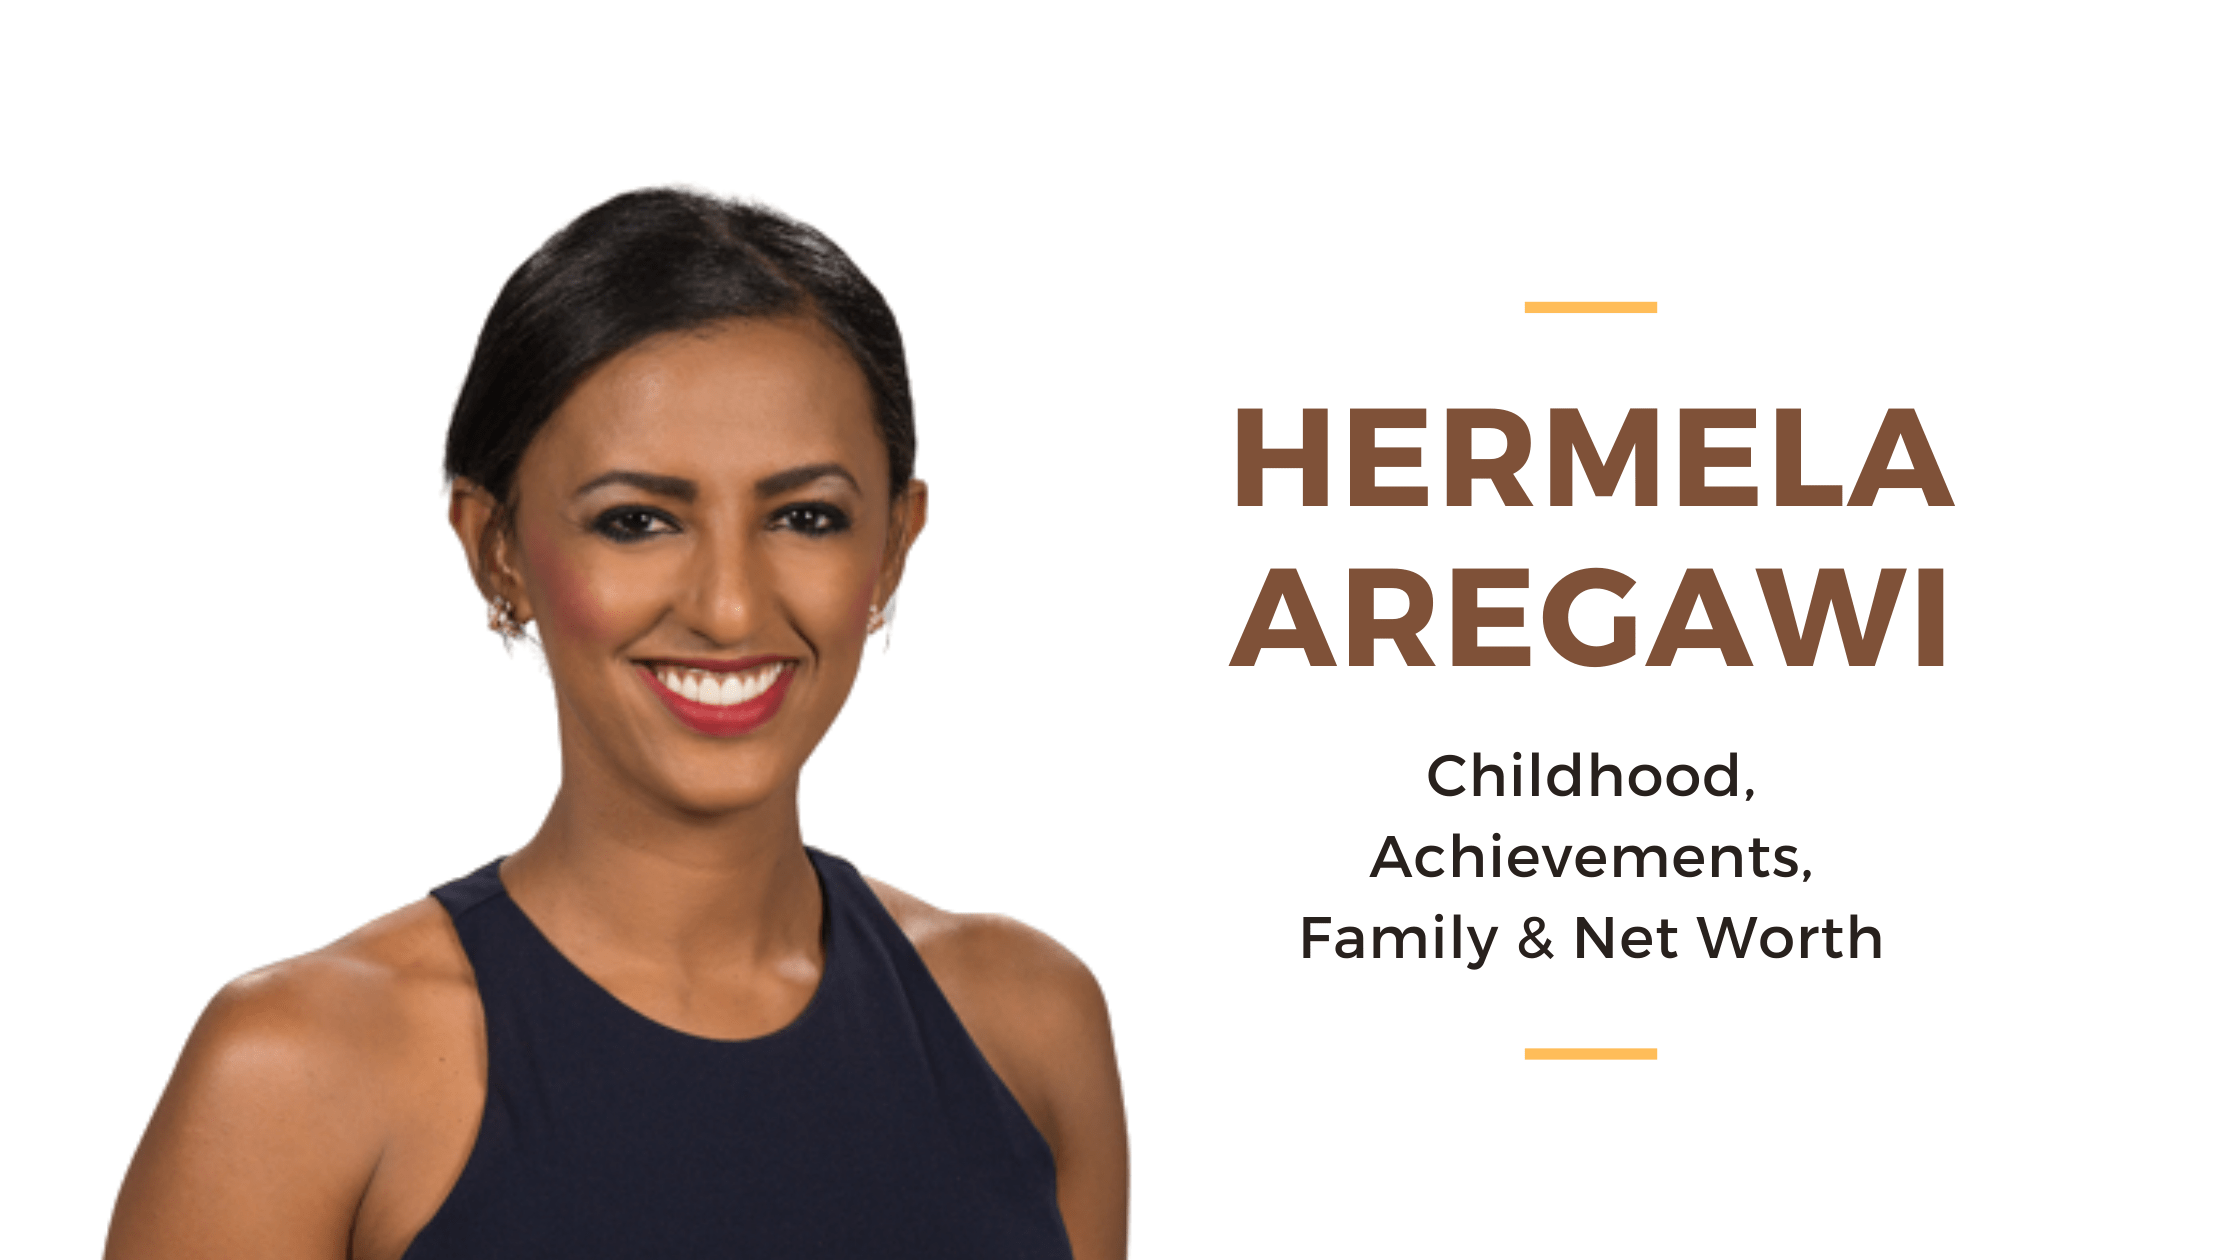 Hermela Aregawi Biography